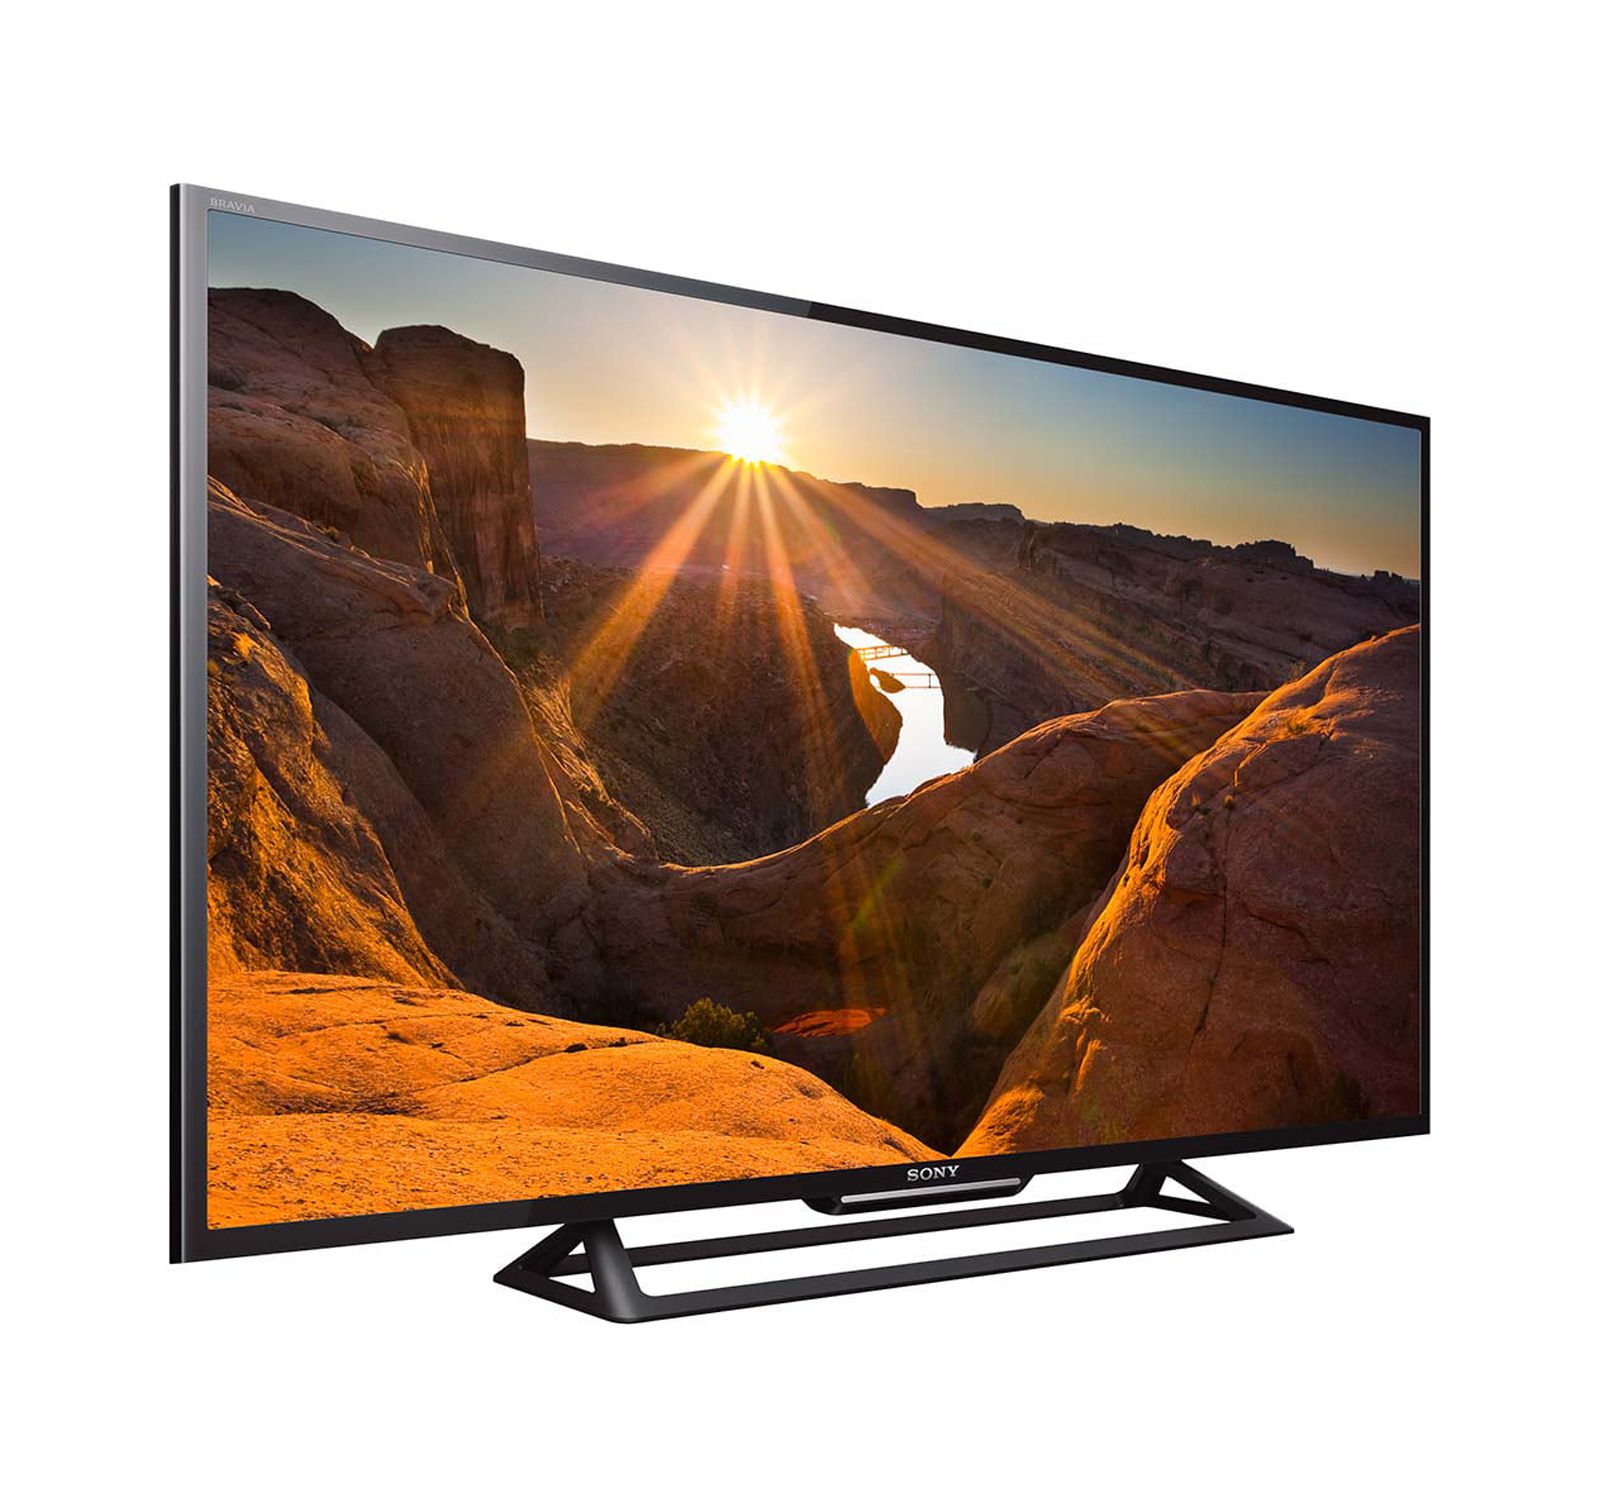 Sony KDL-40R510C - 40" Class - BRAVIA R550C Series LED TV - Smart TV - 1080p (Full HD) 1920 x 1080 - edge-lit, frame dimming - black - image 2 of 4